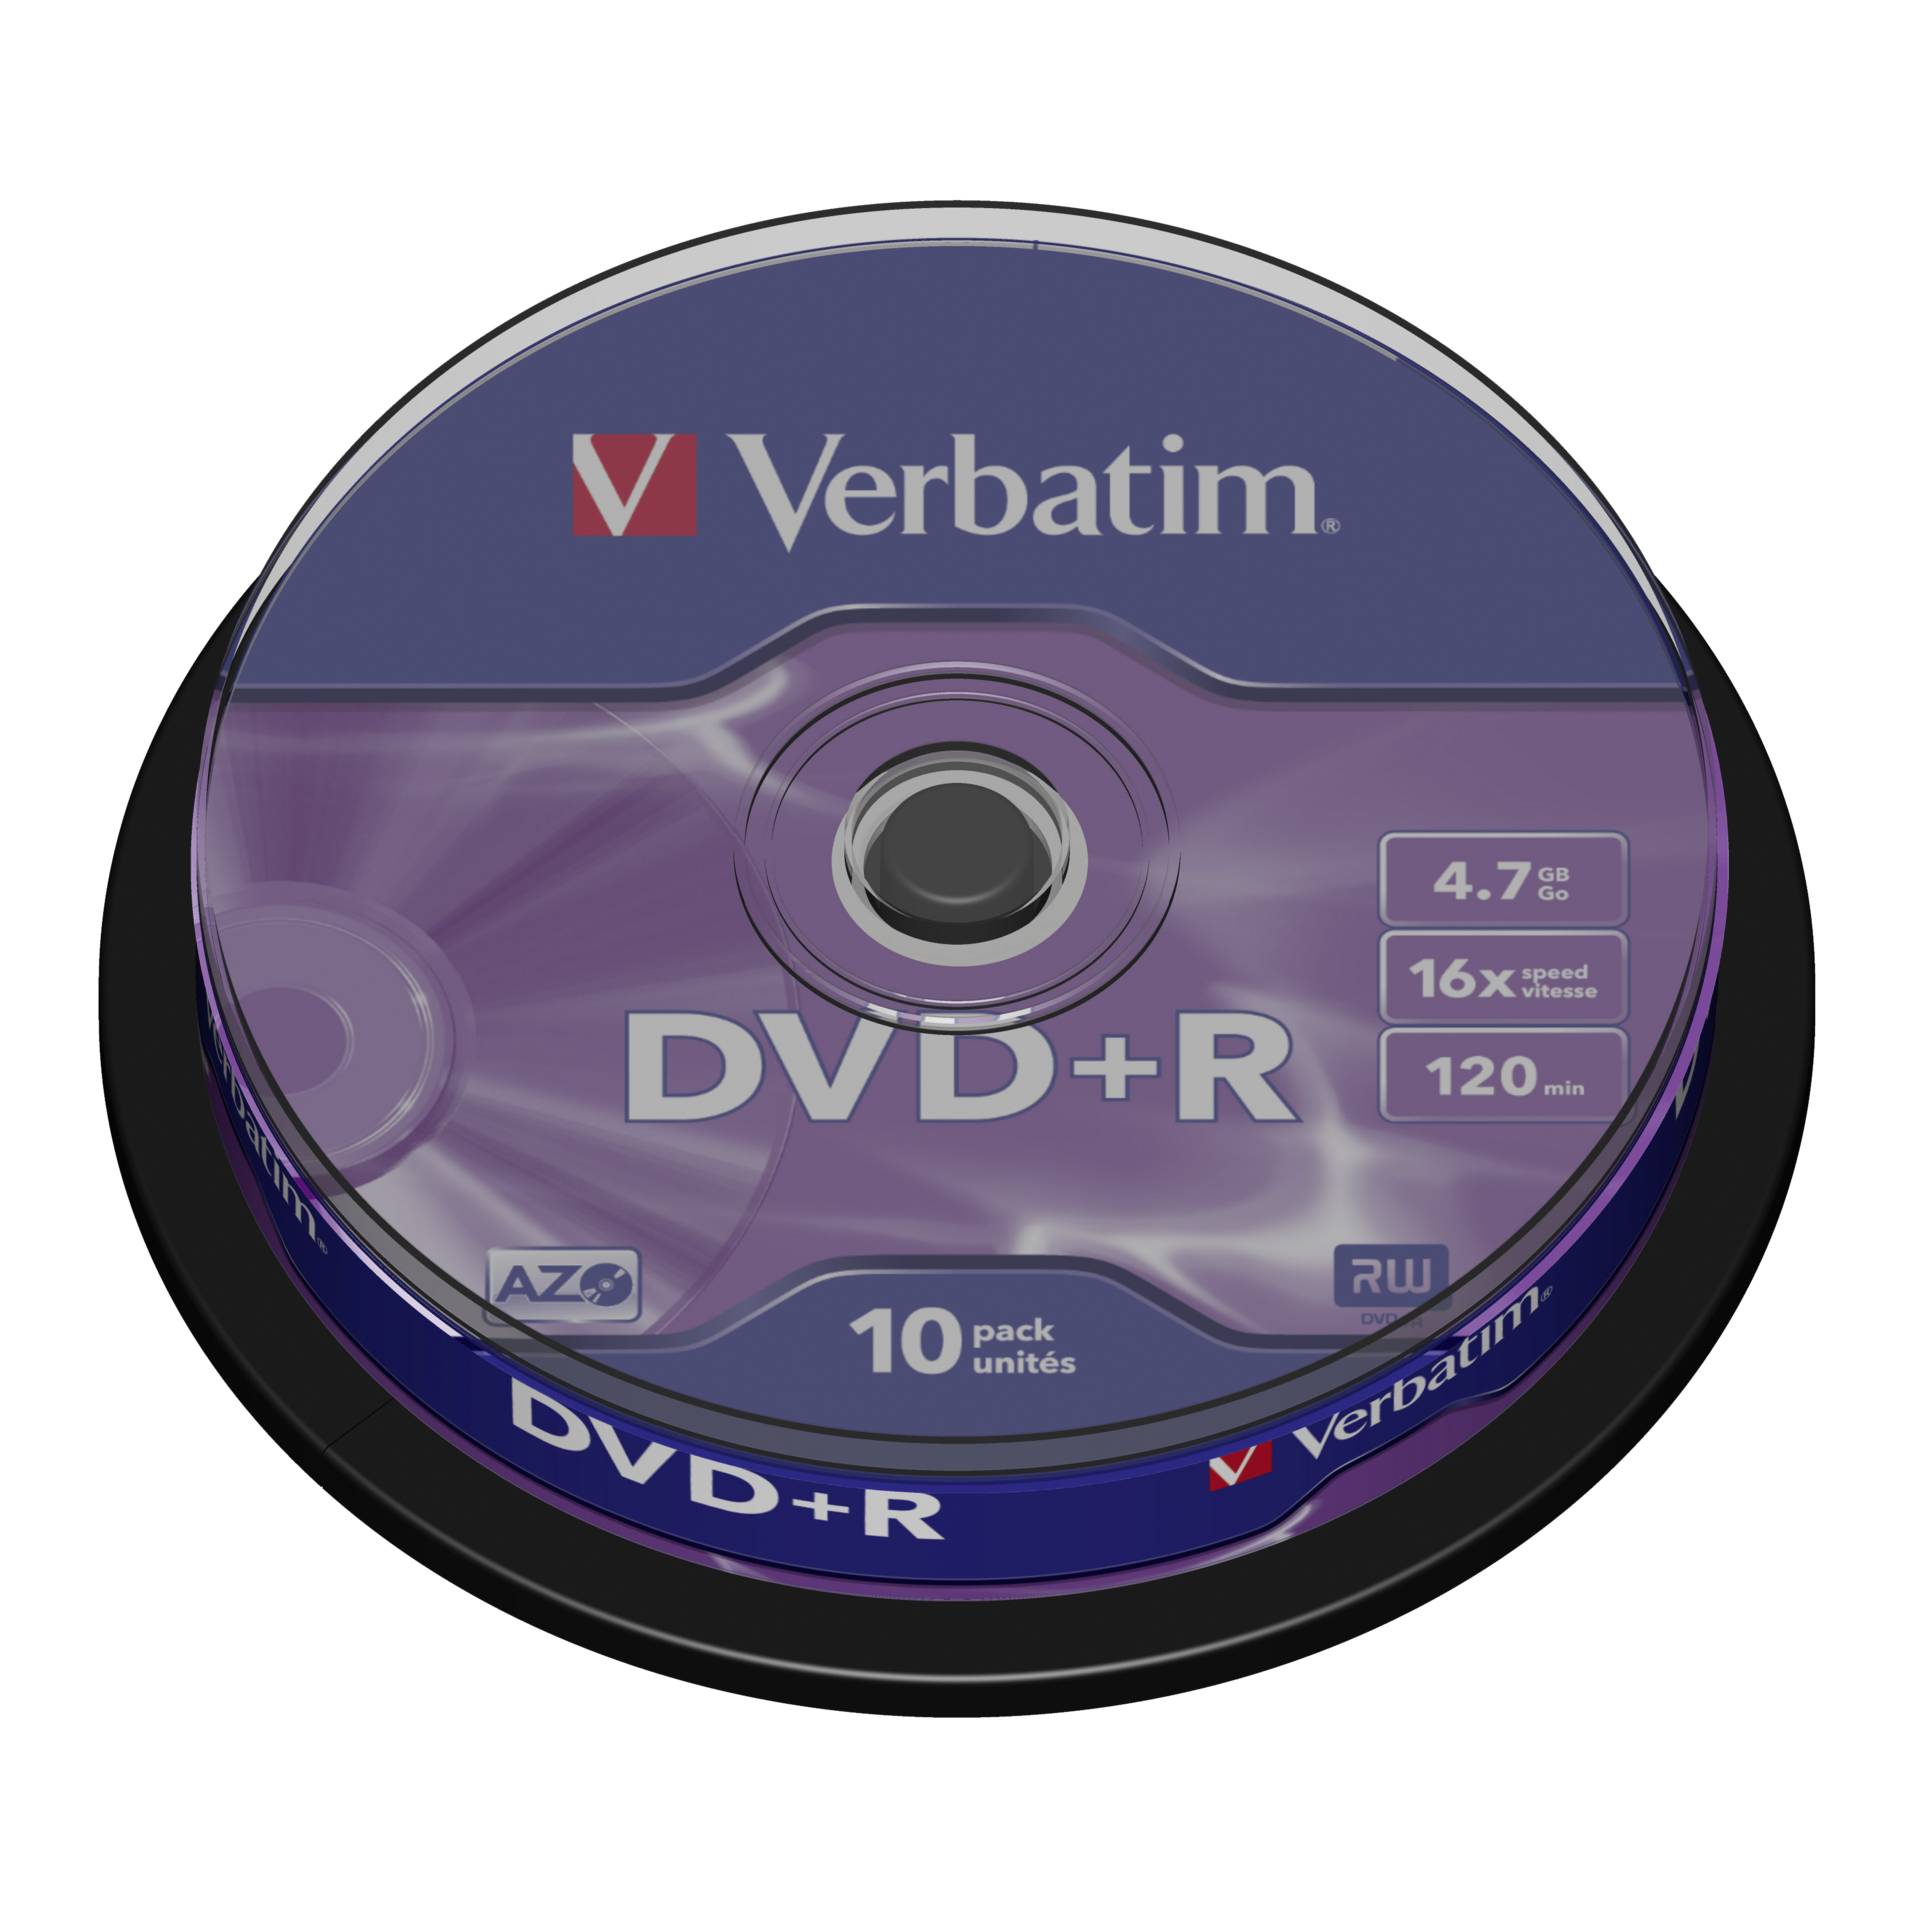 1x10 Verbatim DVD+R 4,7GB 16x Speed, opaco argento Cakebox